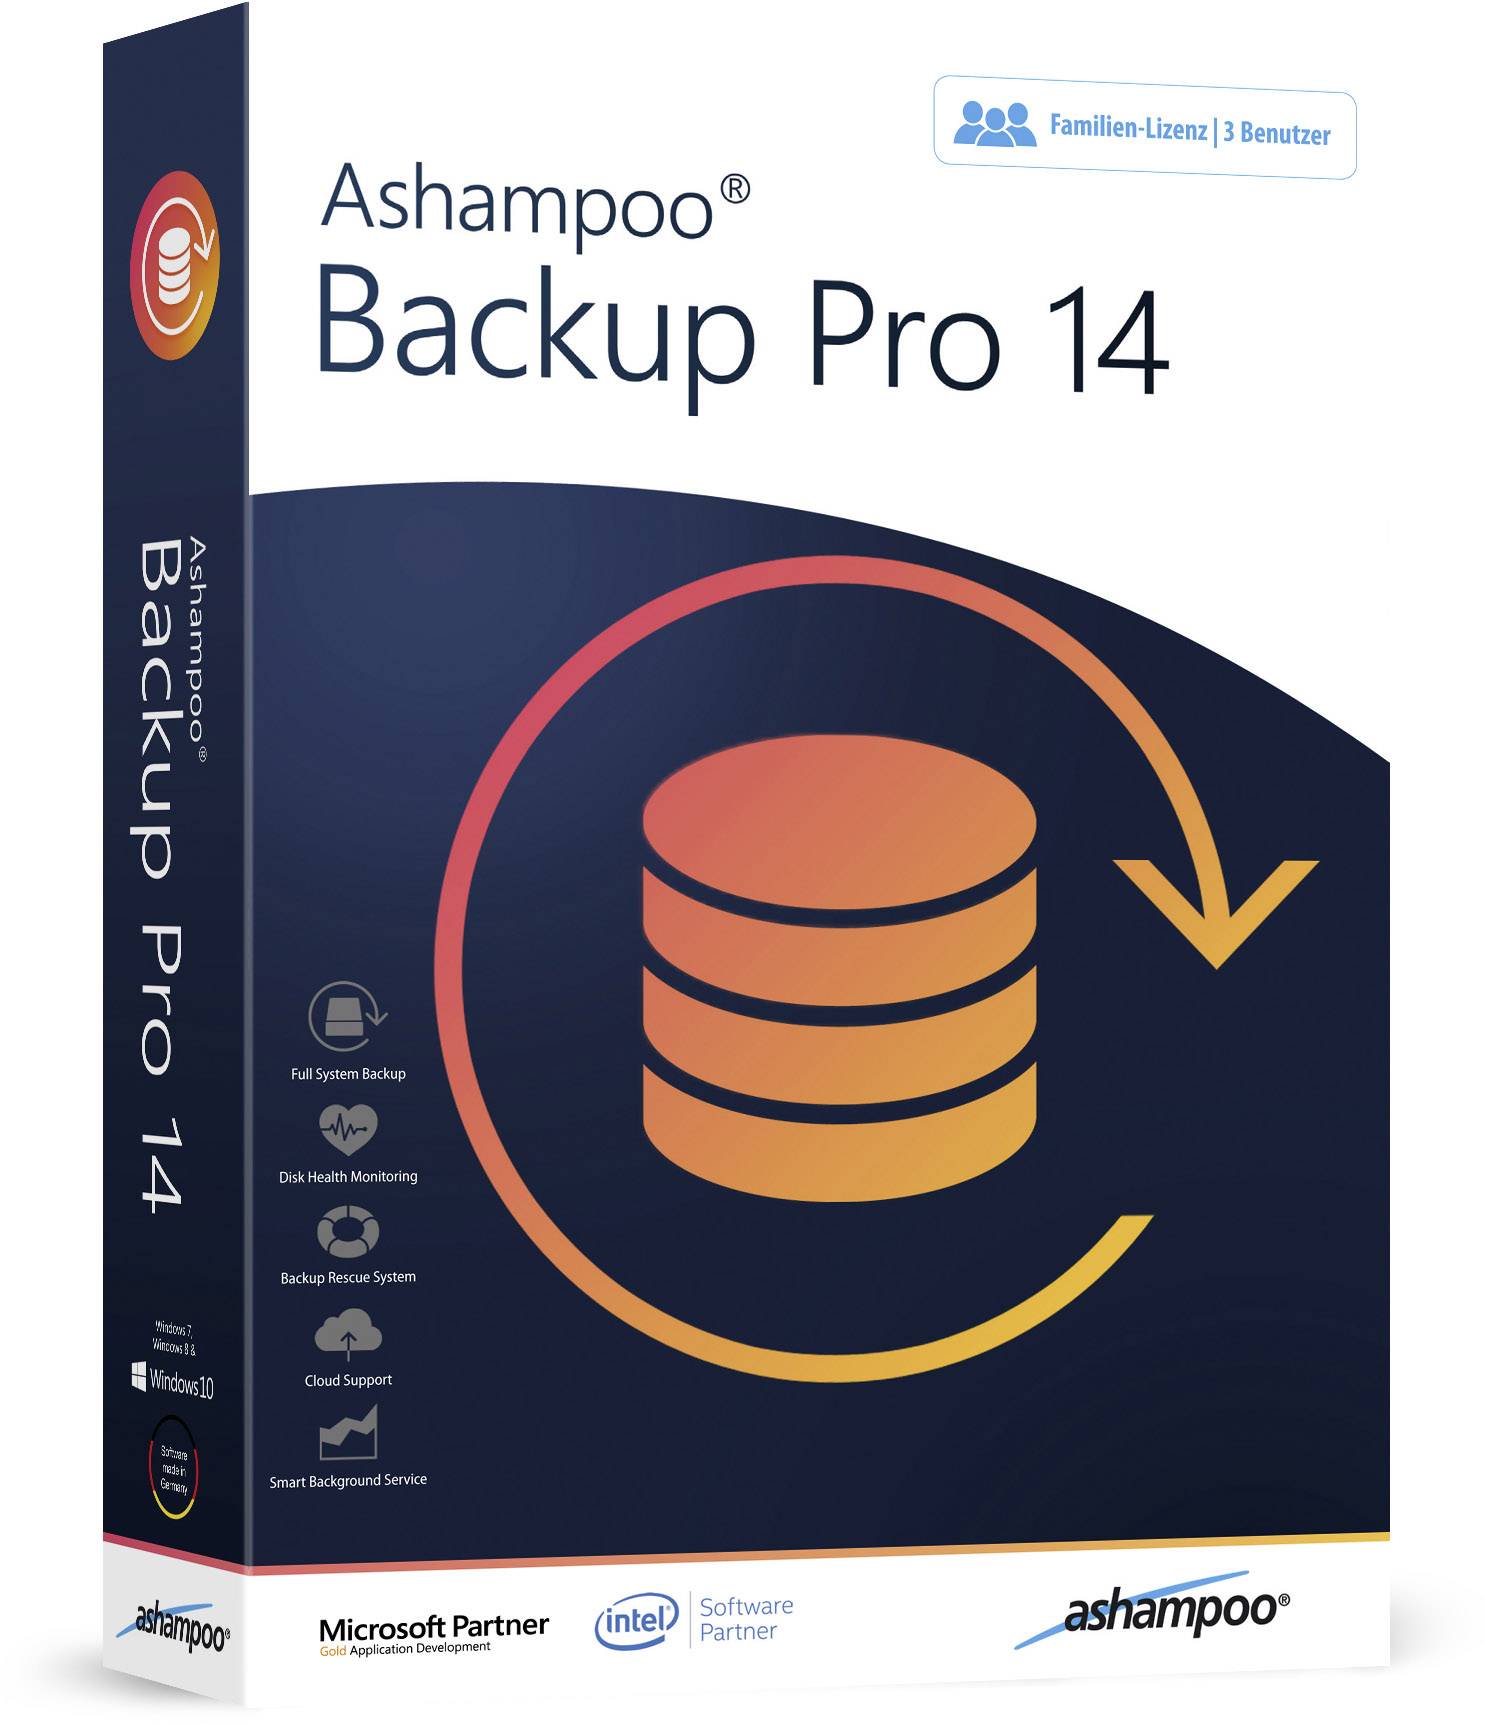 download the last version for ipod Ashampoo Backup Pro 25.01